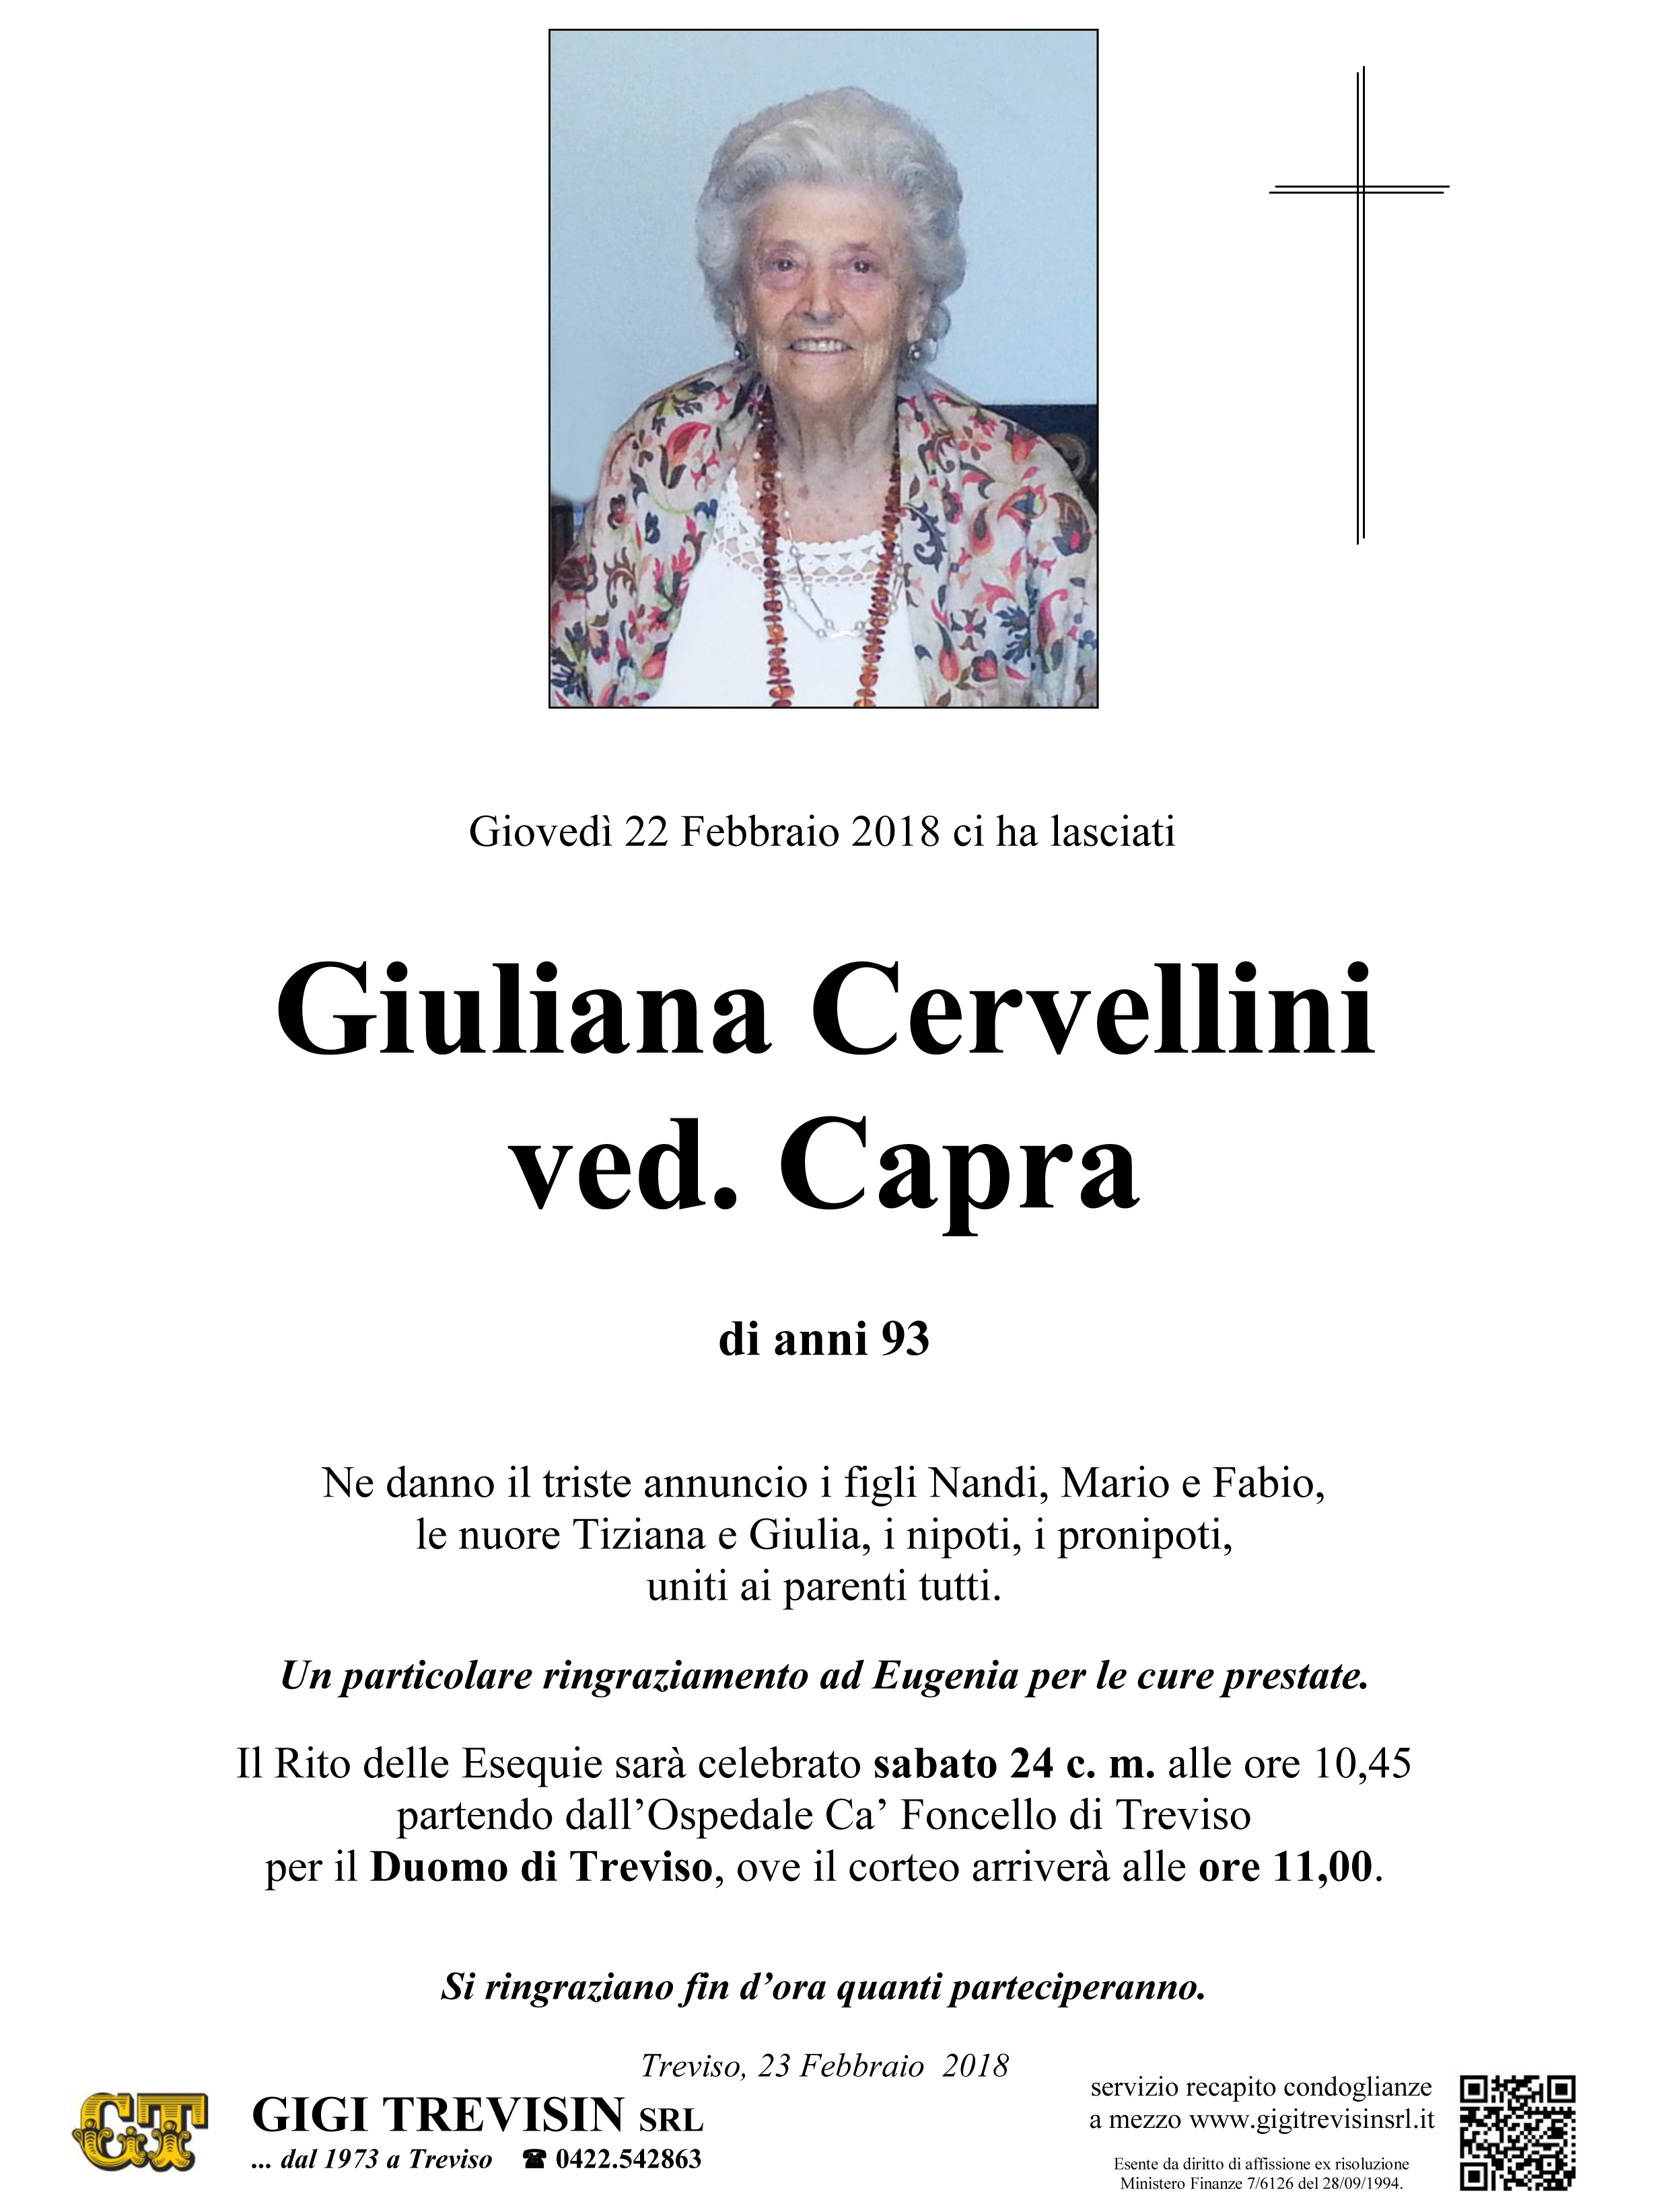 Necrologio Giuliana Cervellini Ved. Capra | MemoriesBooks.it